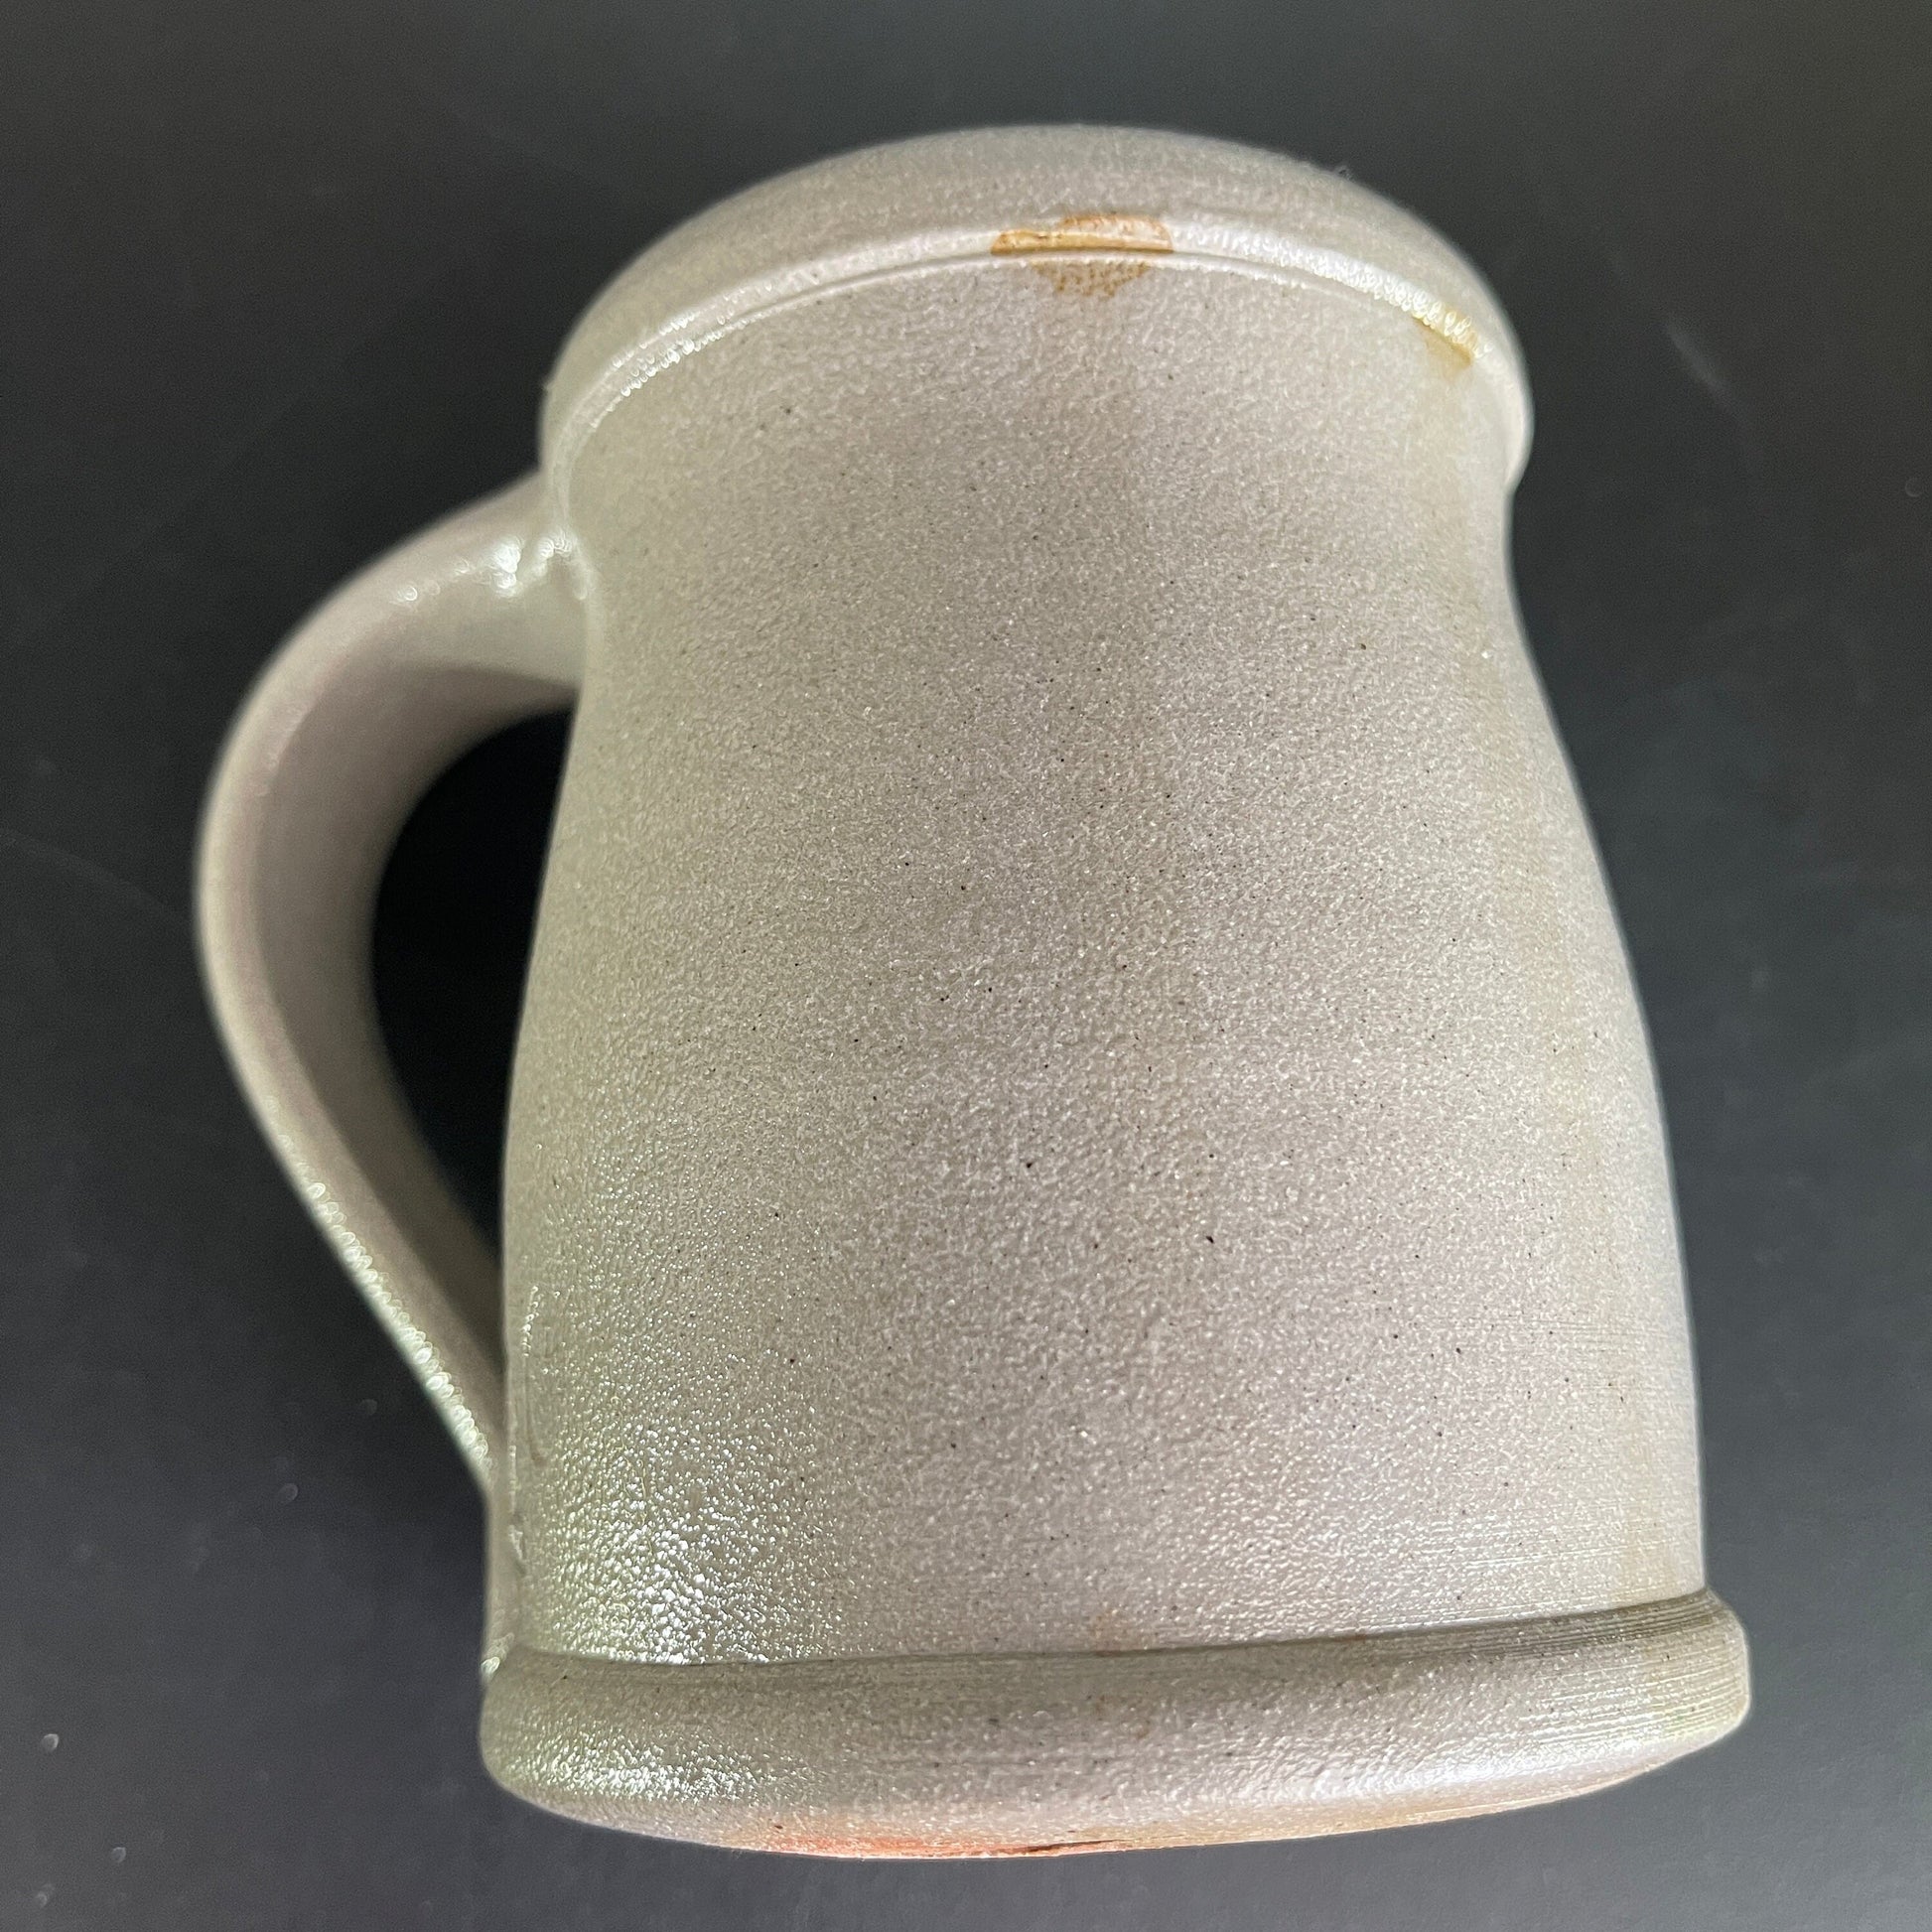 Lowe Pottery Works God Bless America stoneware mug vintage 2002 kitchen collectible